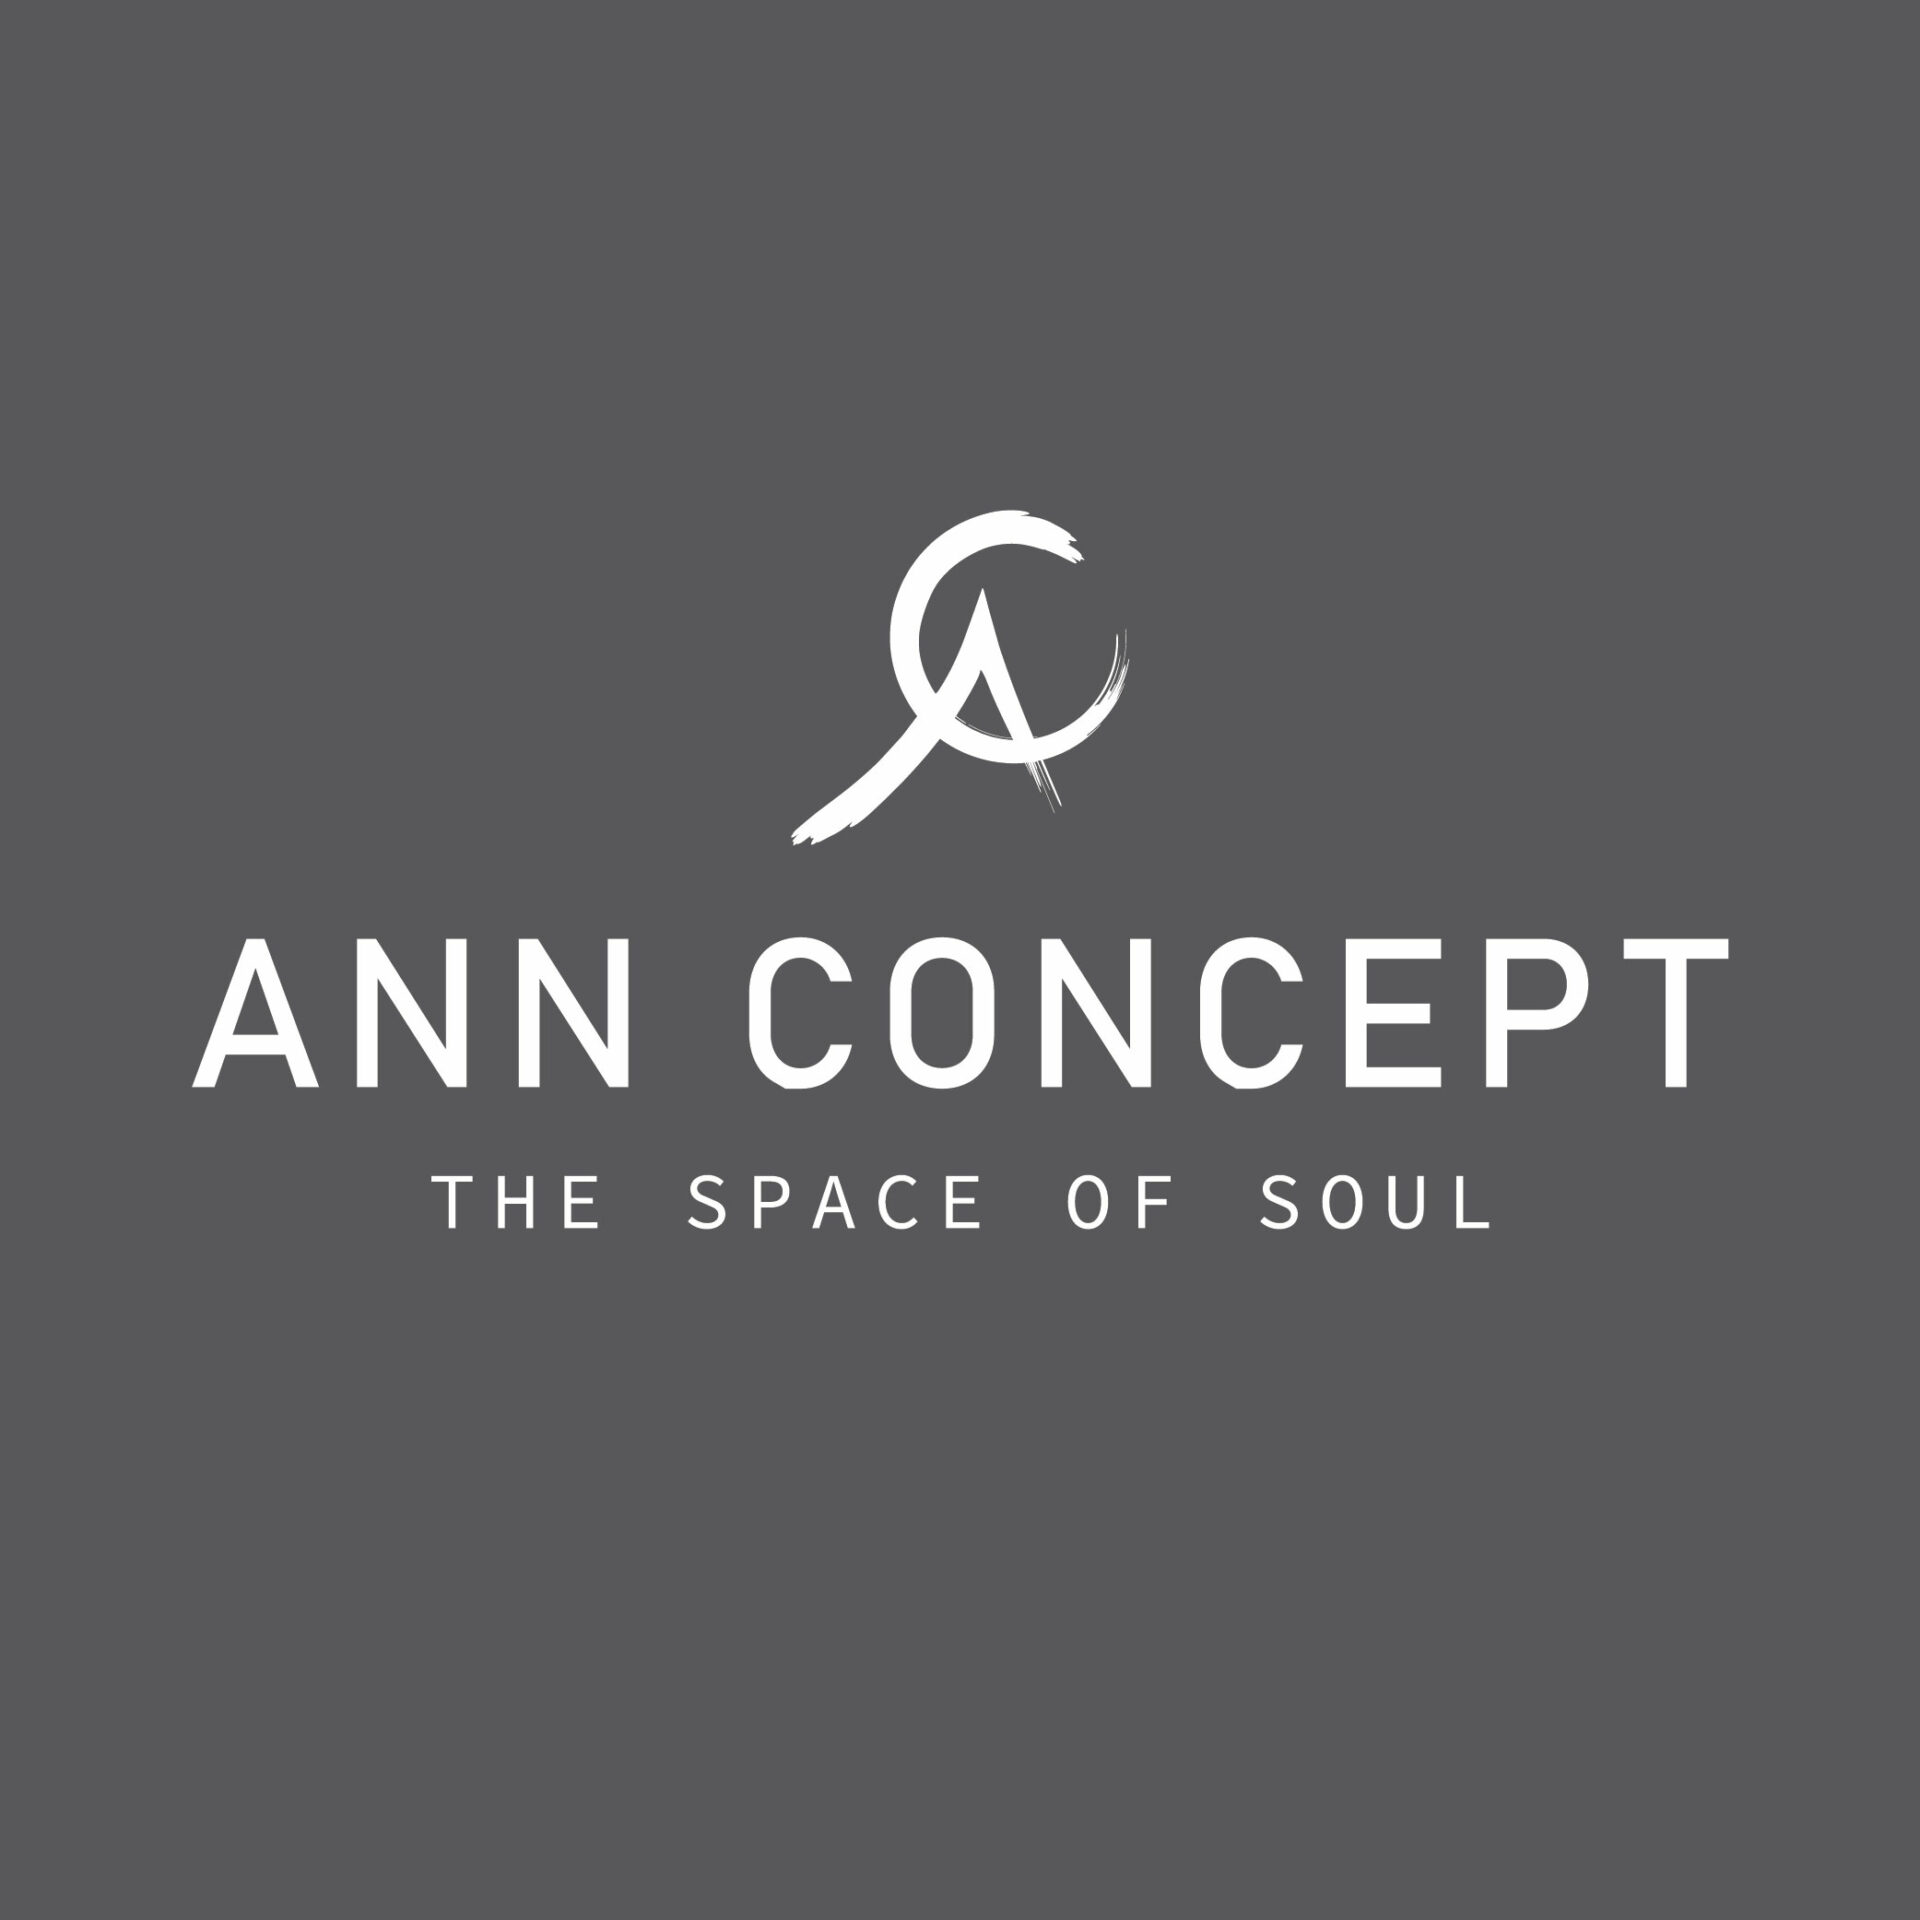 ANN Concept logo 02 scaled